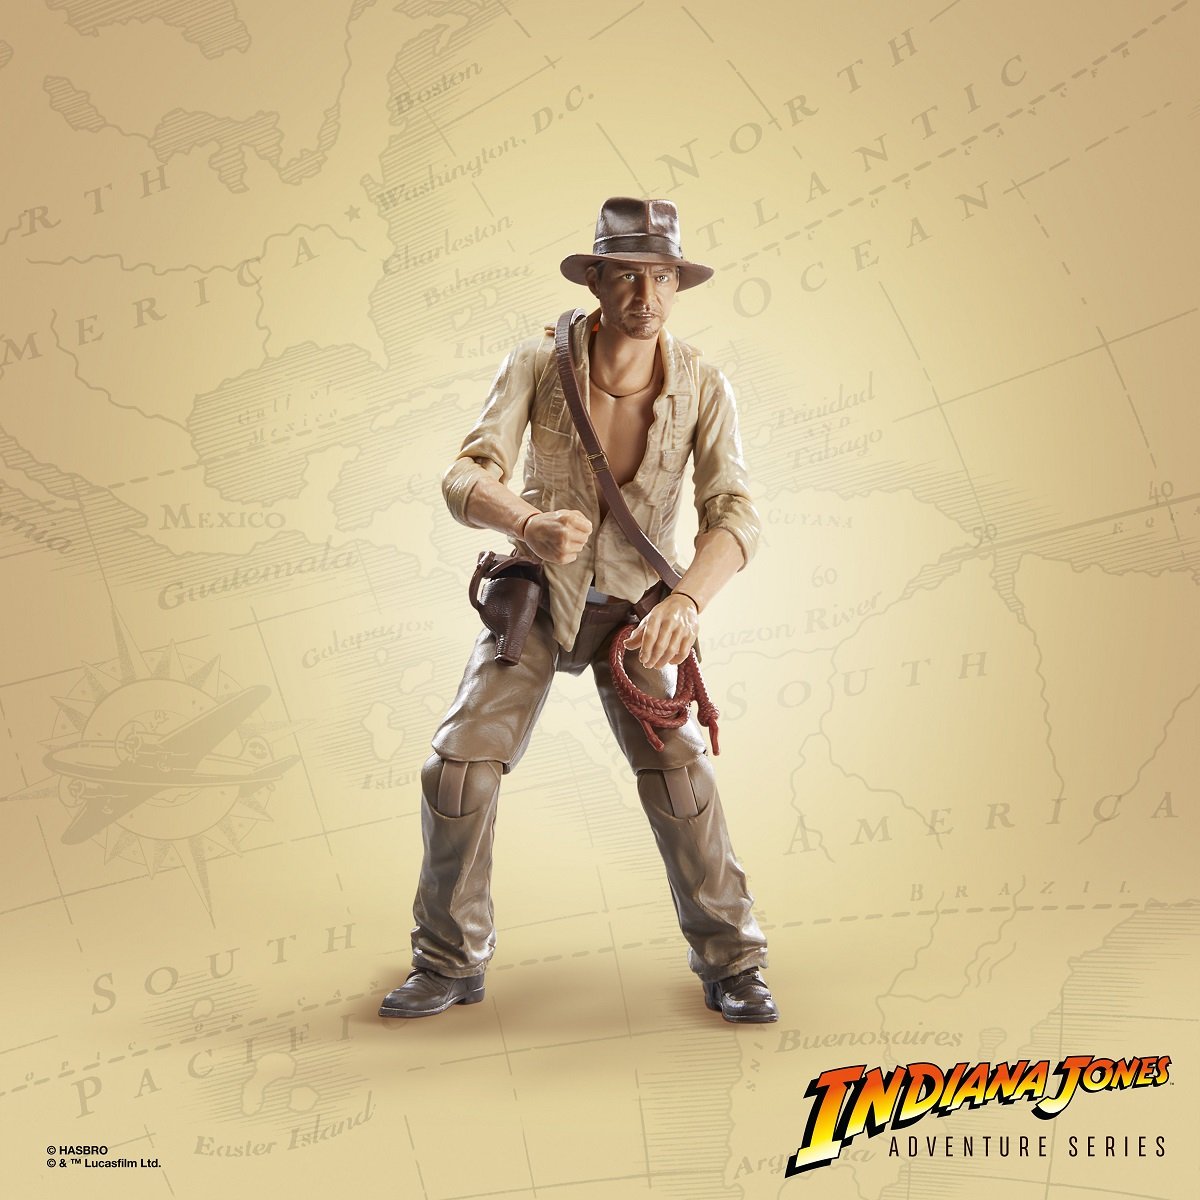 Close up of the Indiana Jones Adventure Cairo Indiana Jones figure from Hasbro.